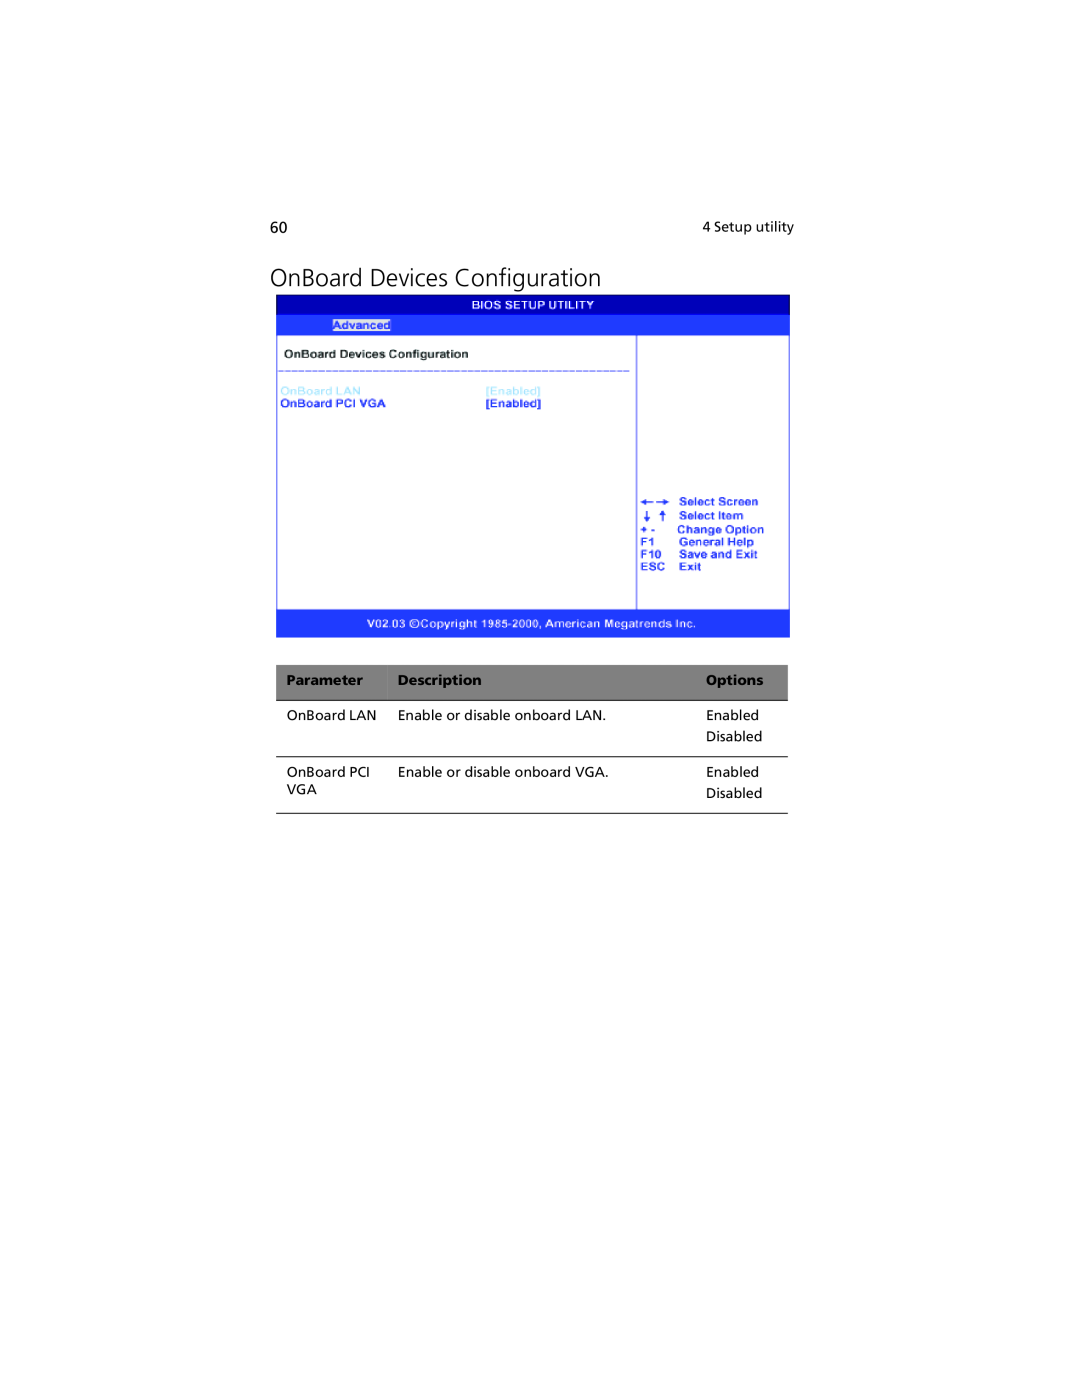 Acer G301 manual OnBoard Devices Configuration, Parameter, Description, Options 